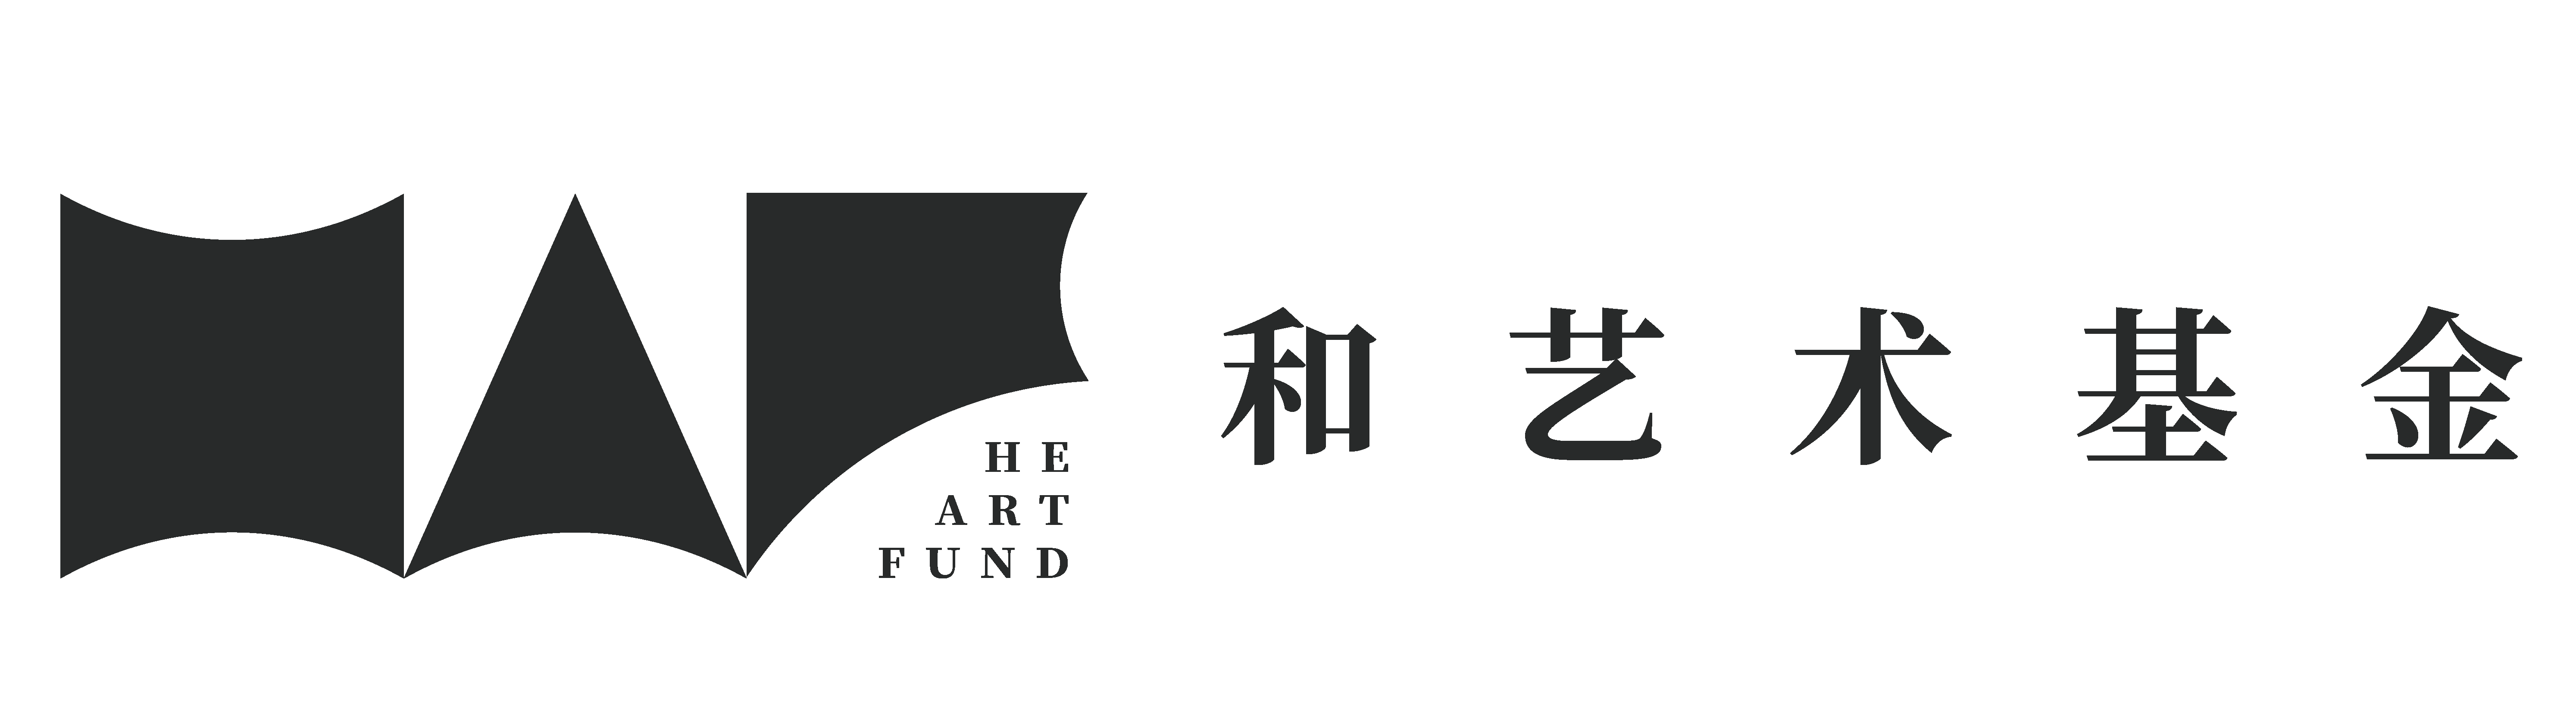 logo-和艺术基金-黑.png